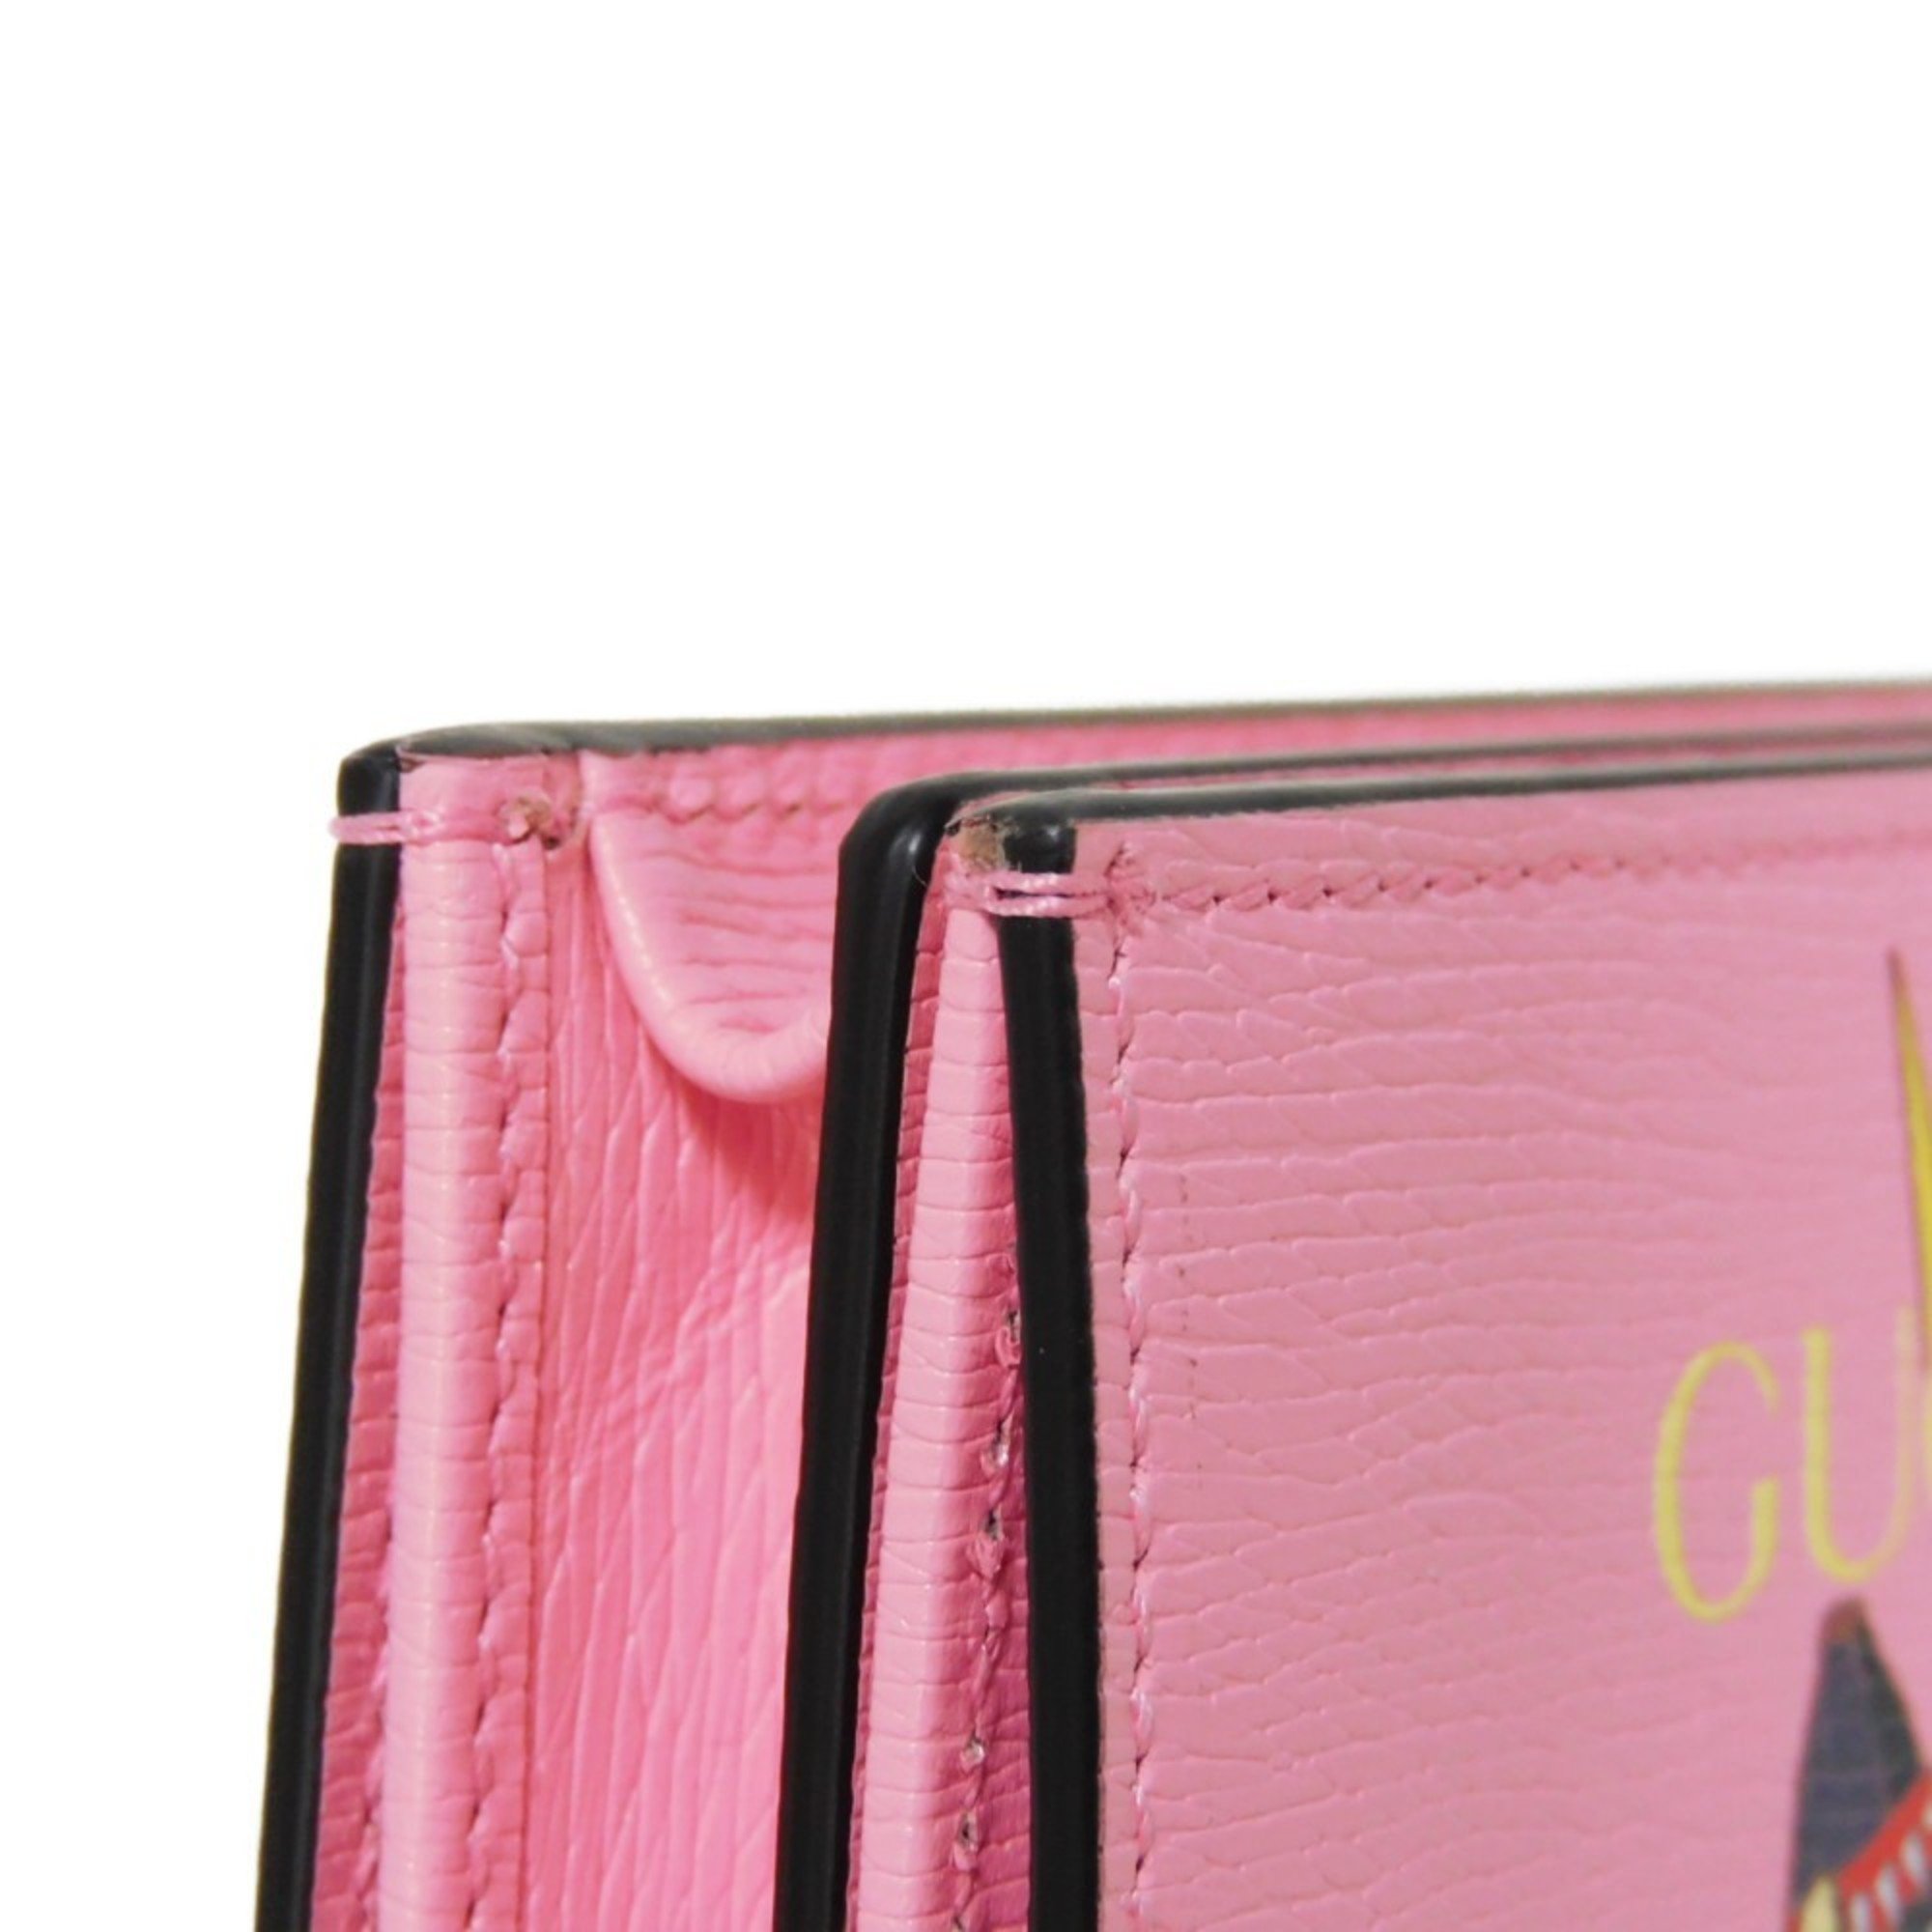 GUCCI Bifold Wallet Bananya Compact Banana Lightning Bolt Pastel Pink Light 701009 Women's